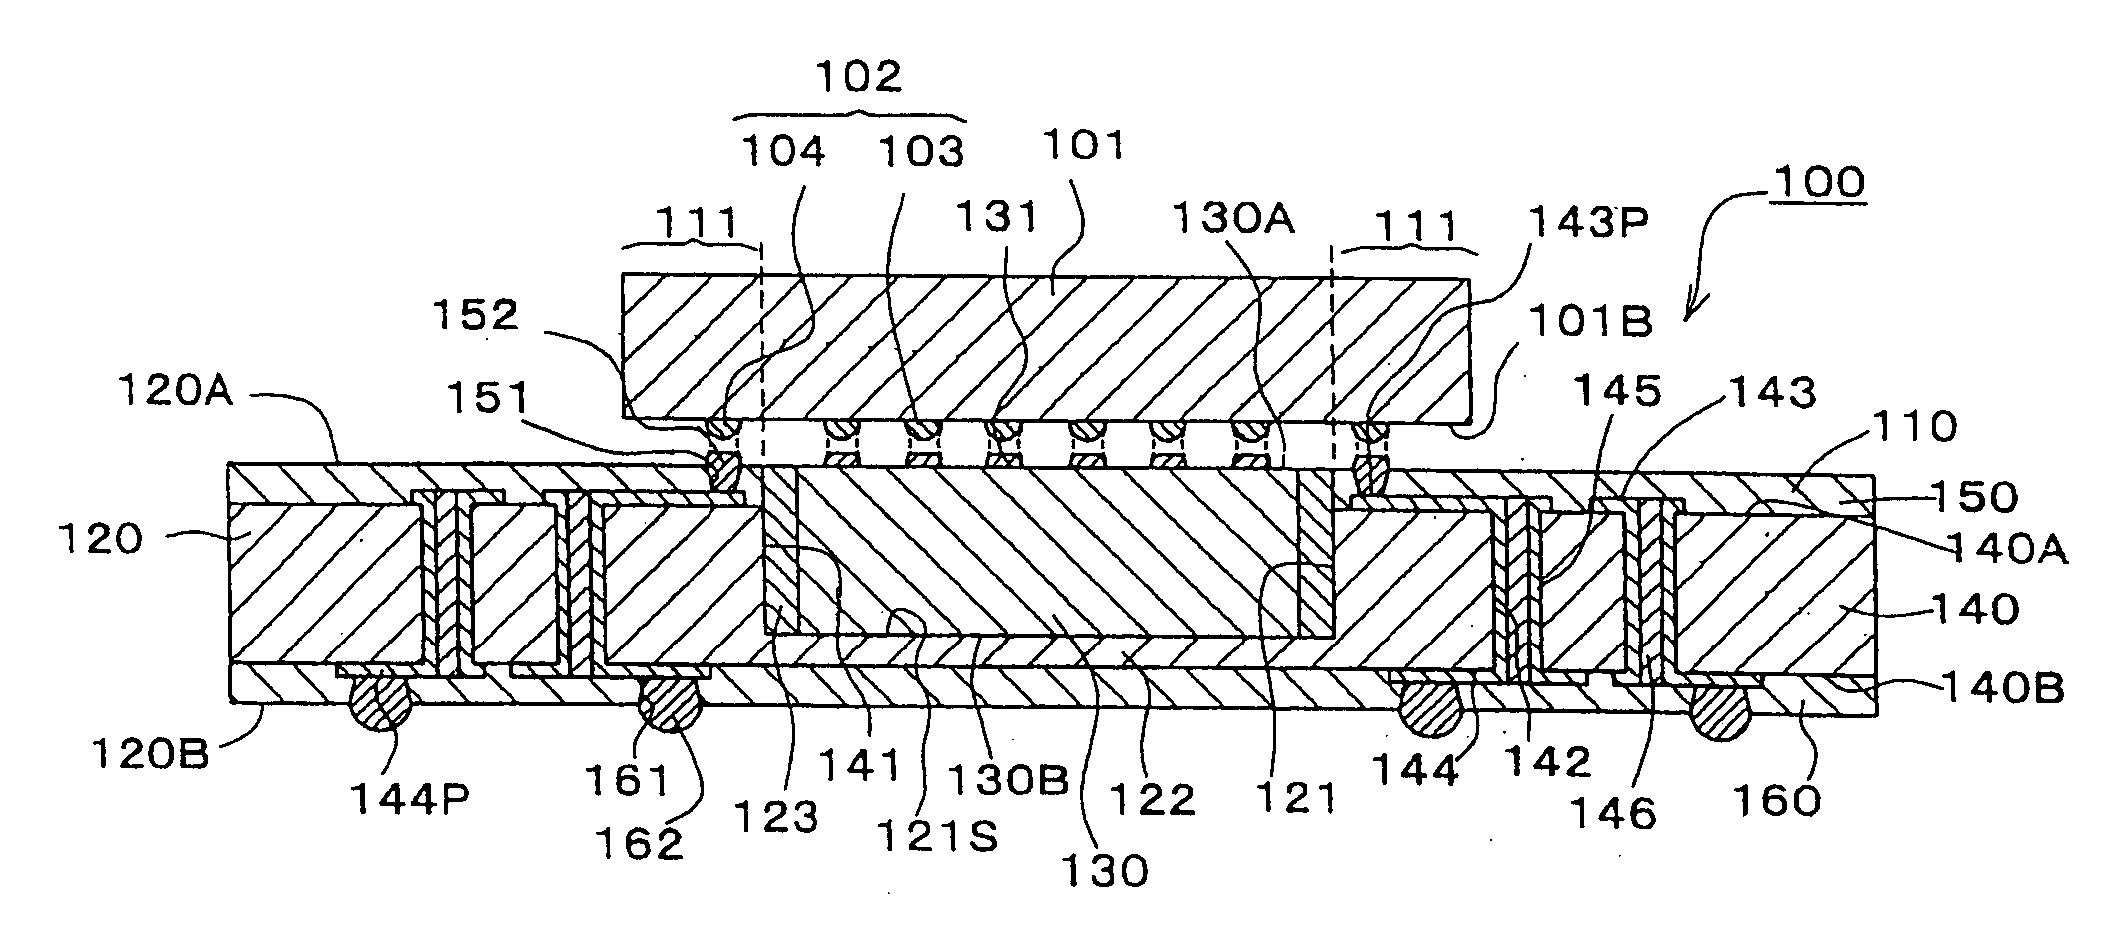 Capacitor-built-in-type printed wiring substrate printed wiring substrate, and capacitor